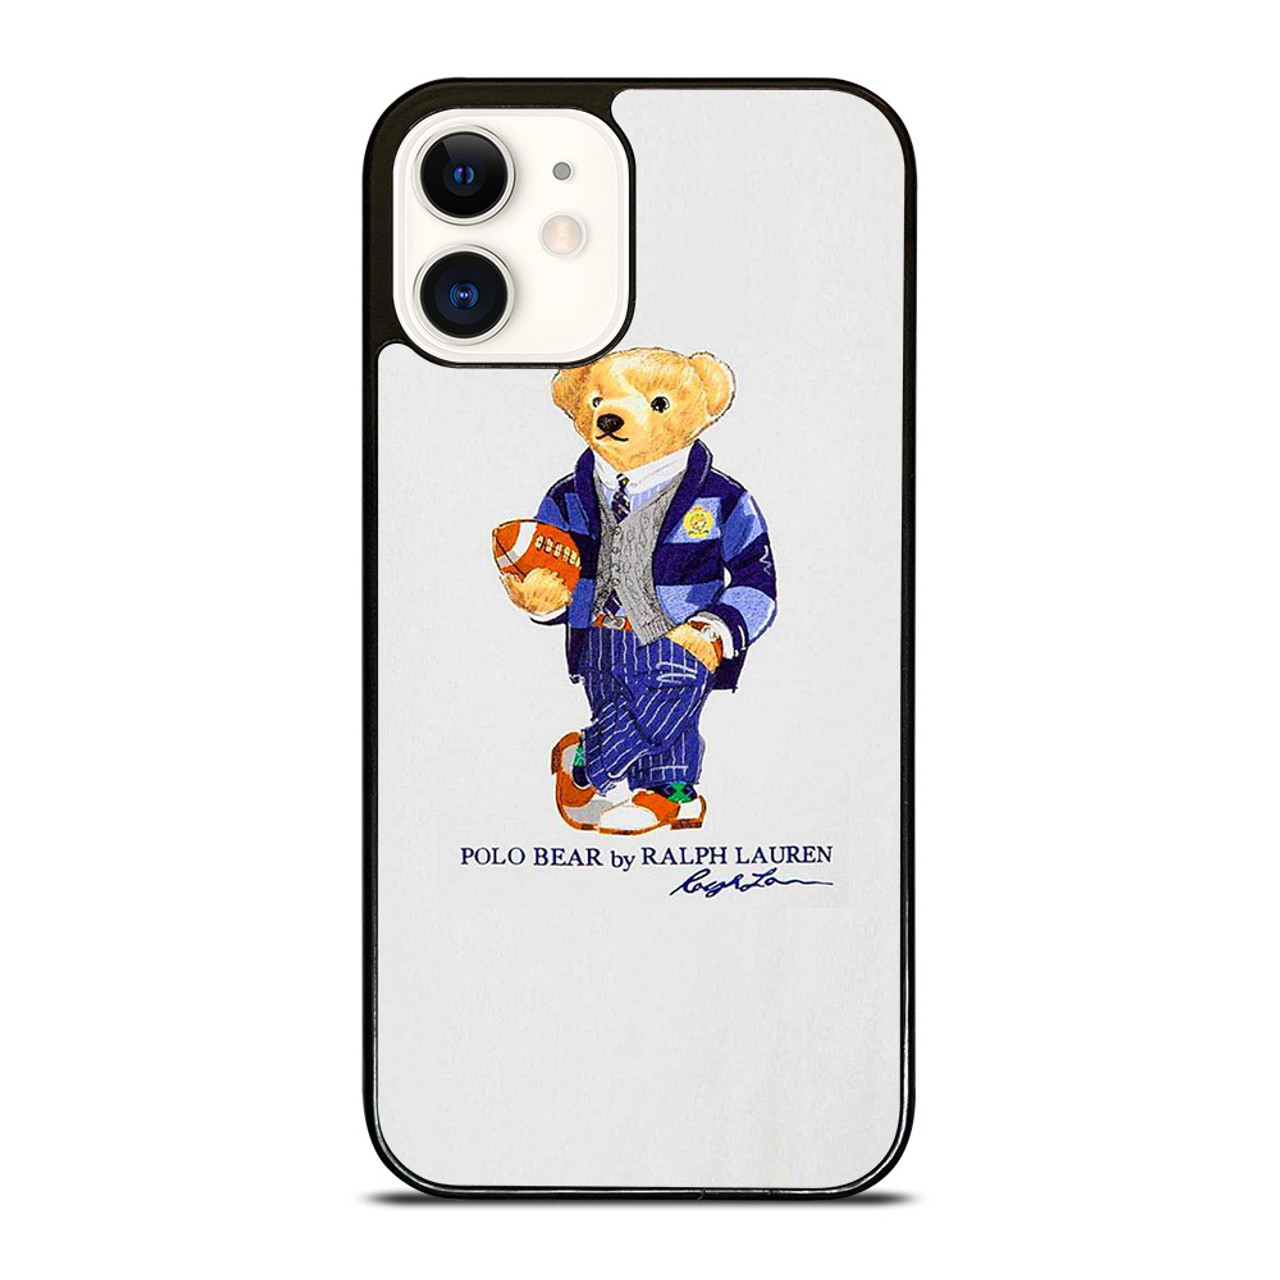 POLO BEAR RALPH LAUREN 1 iPhone 12 Case Cover